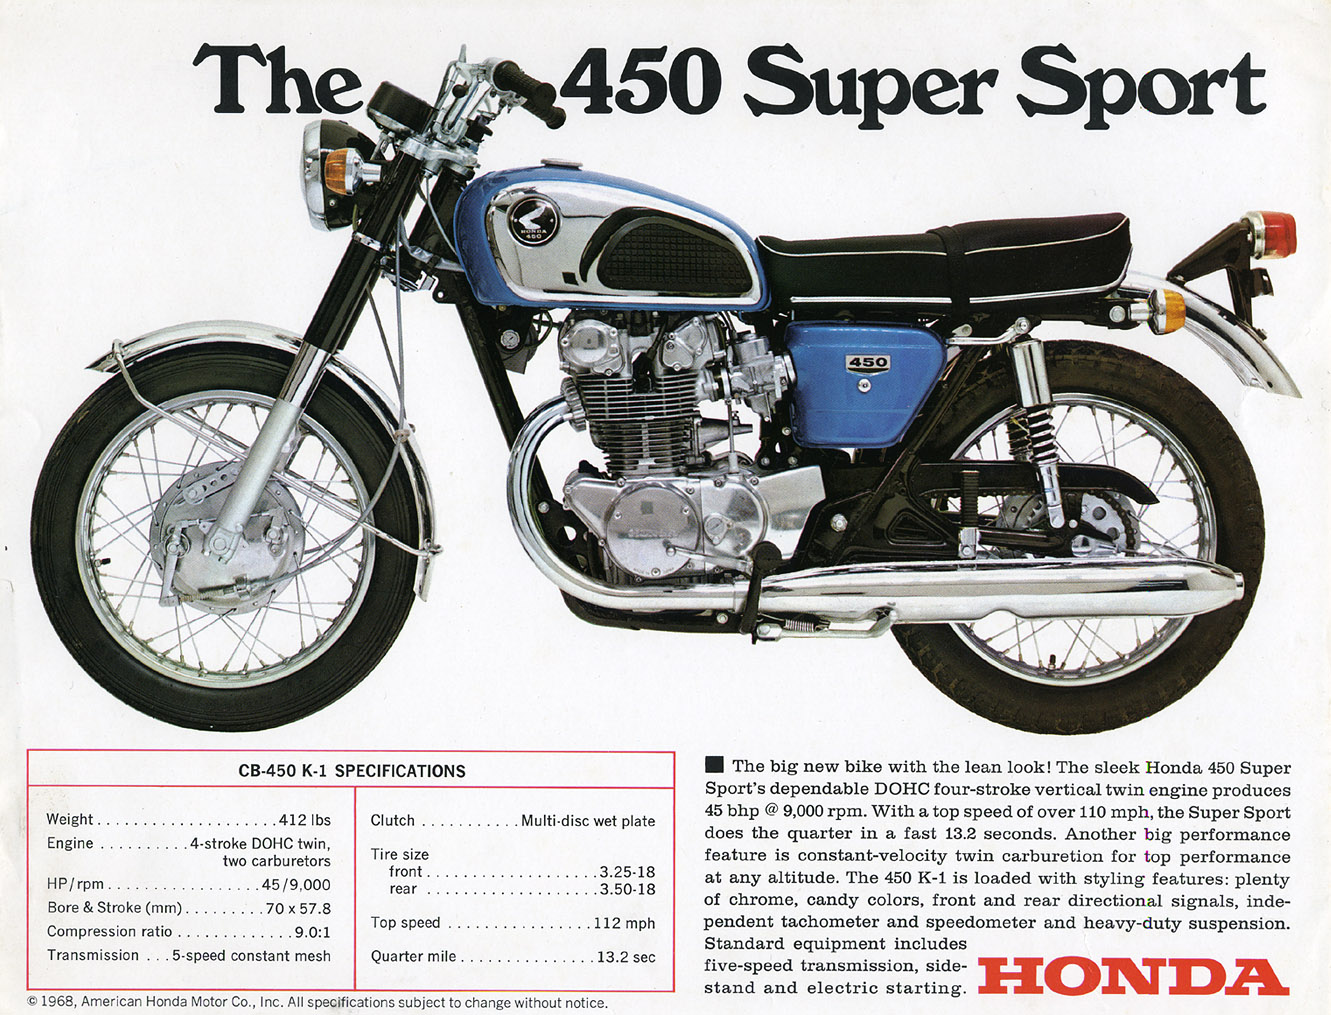 original 1968 brochure for the CB450K1